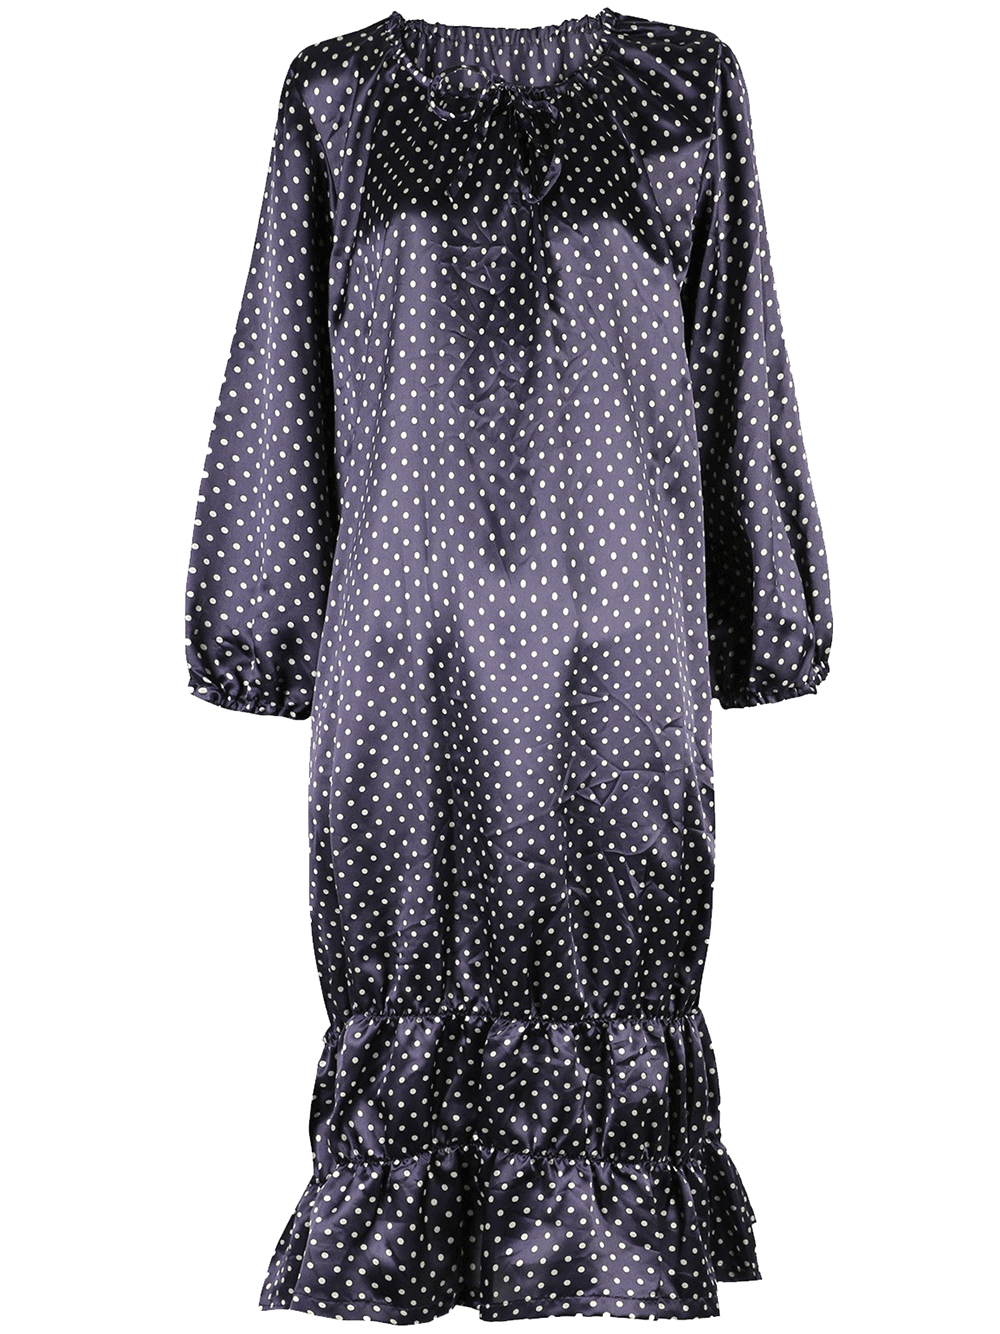 COMME-des-GARCONS-GIRL-Overall-Polka-Dot-Dress-Black-1